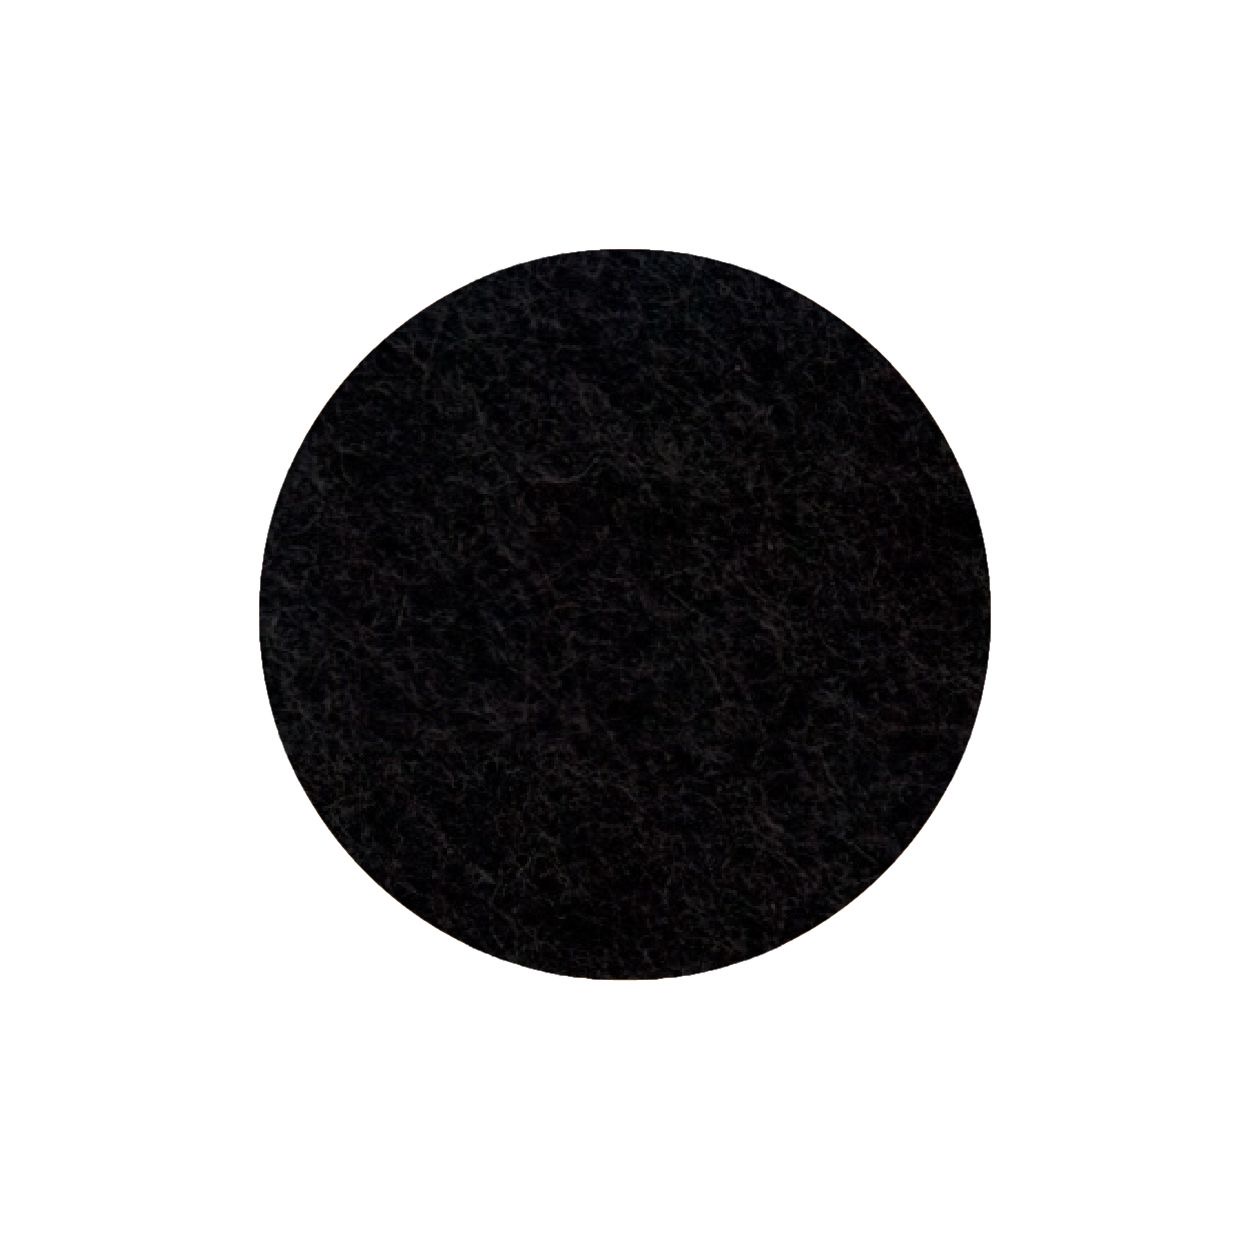 Onderzetter 16 cm black 02